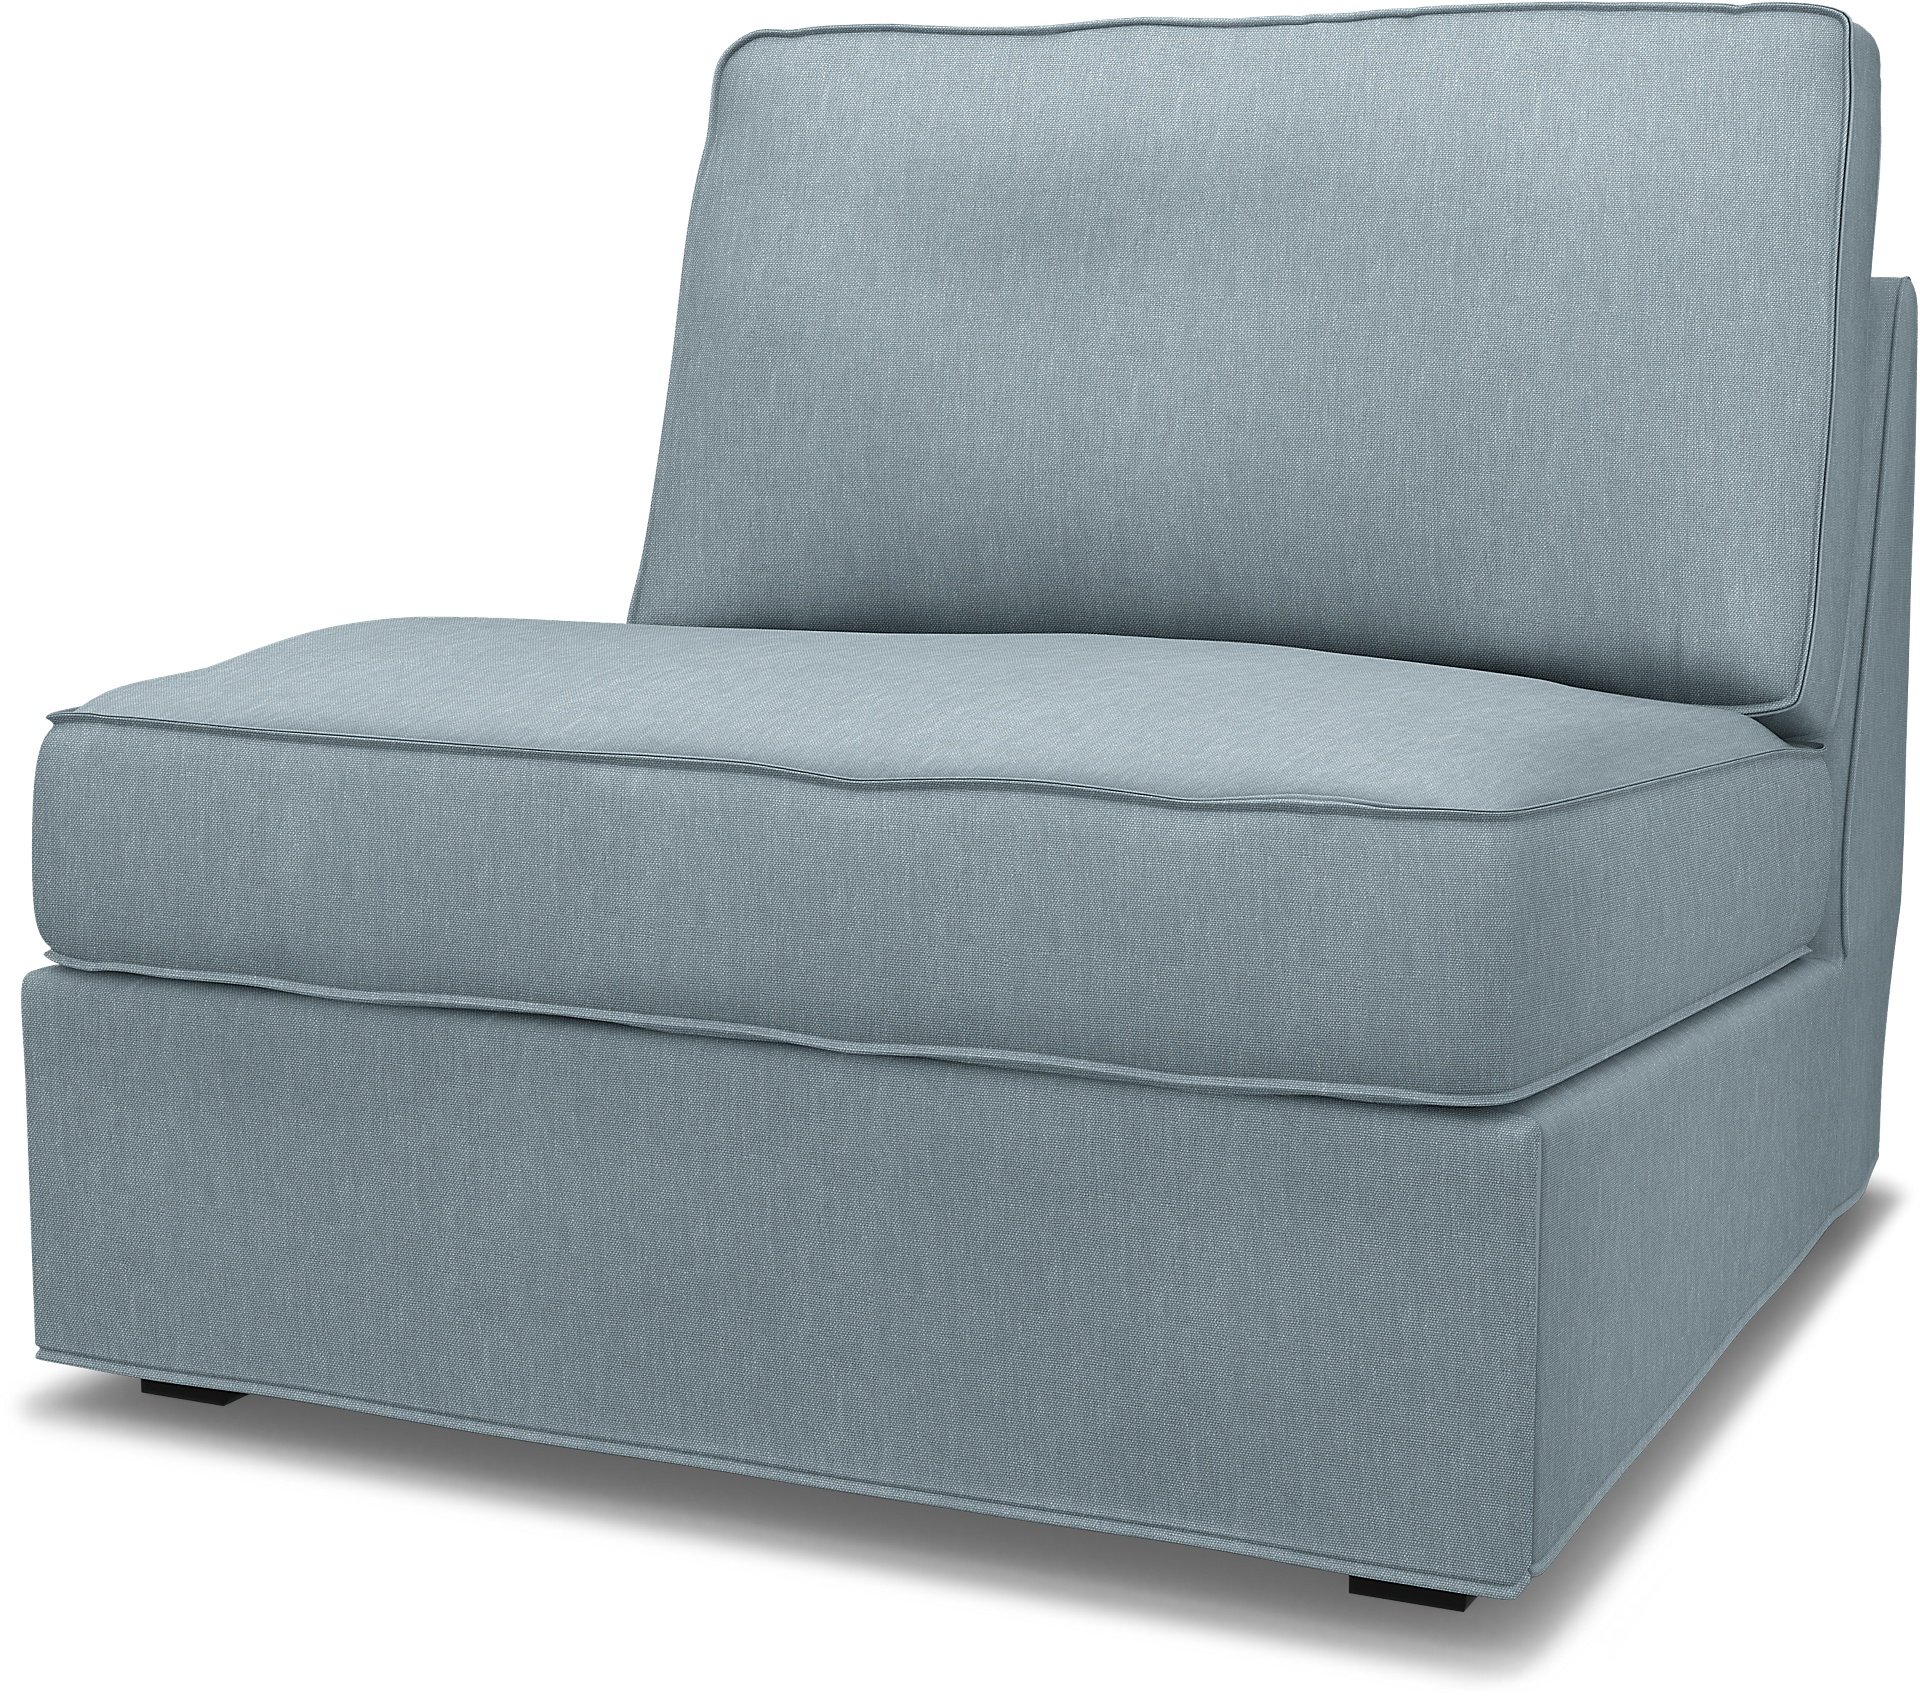 IKEA - Kivik 1 seater sofa bed, Dusty Blue, Linen - Bemz